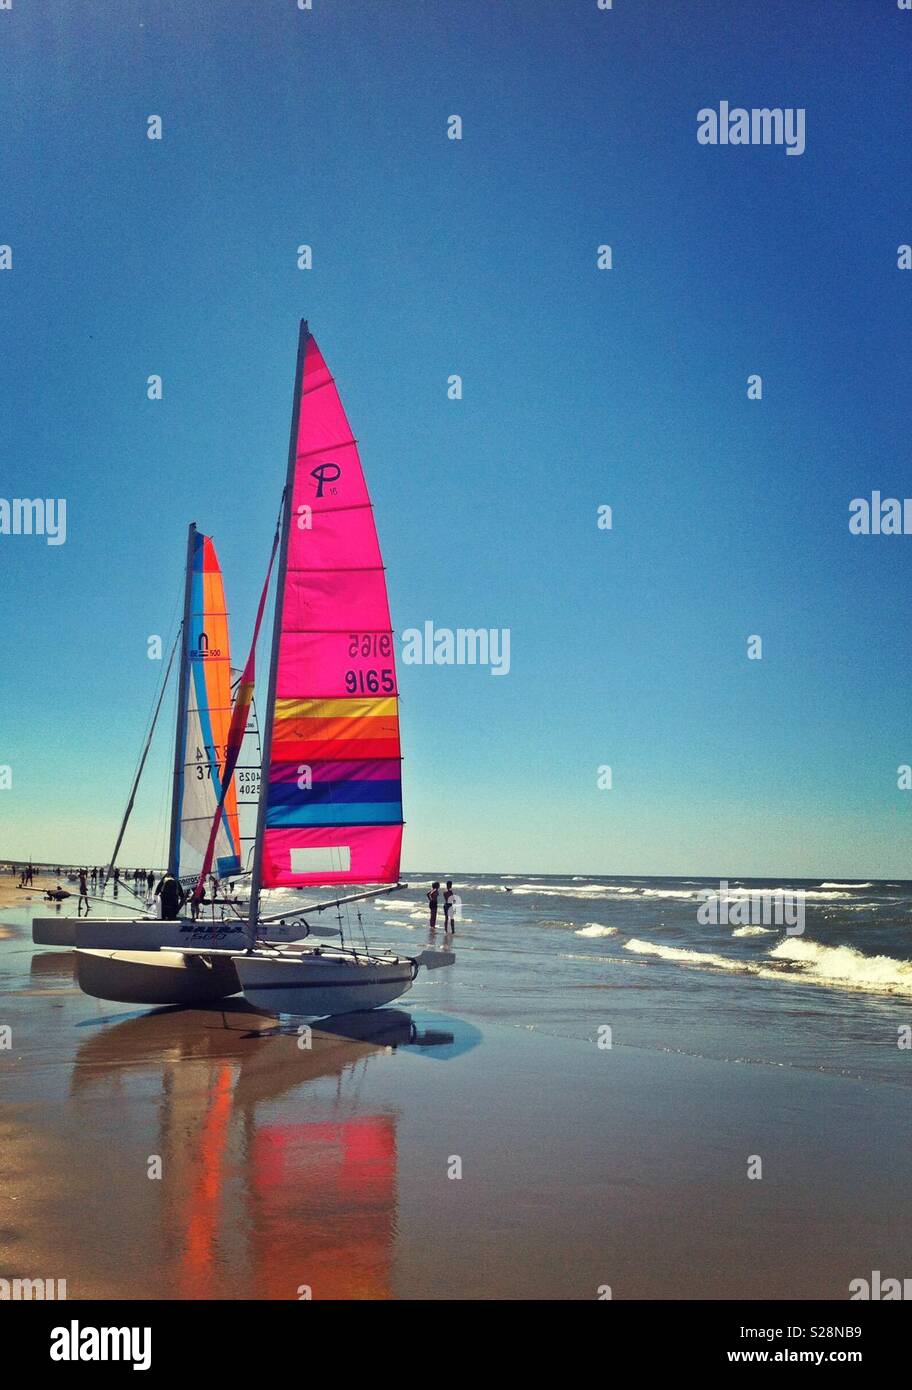 Colorful catamaran in the beach Stock Photo